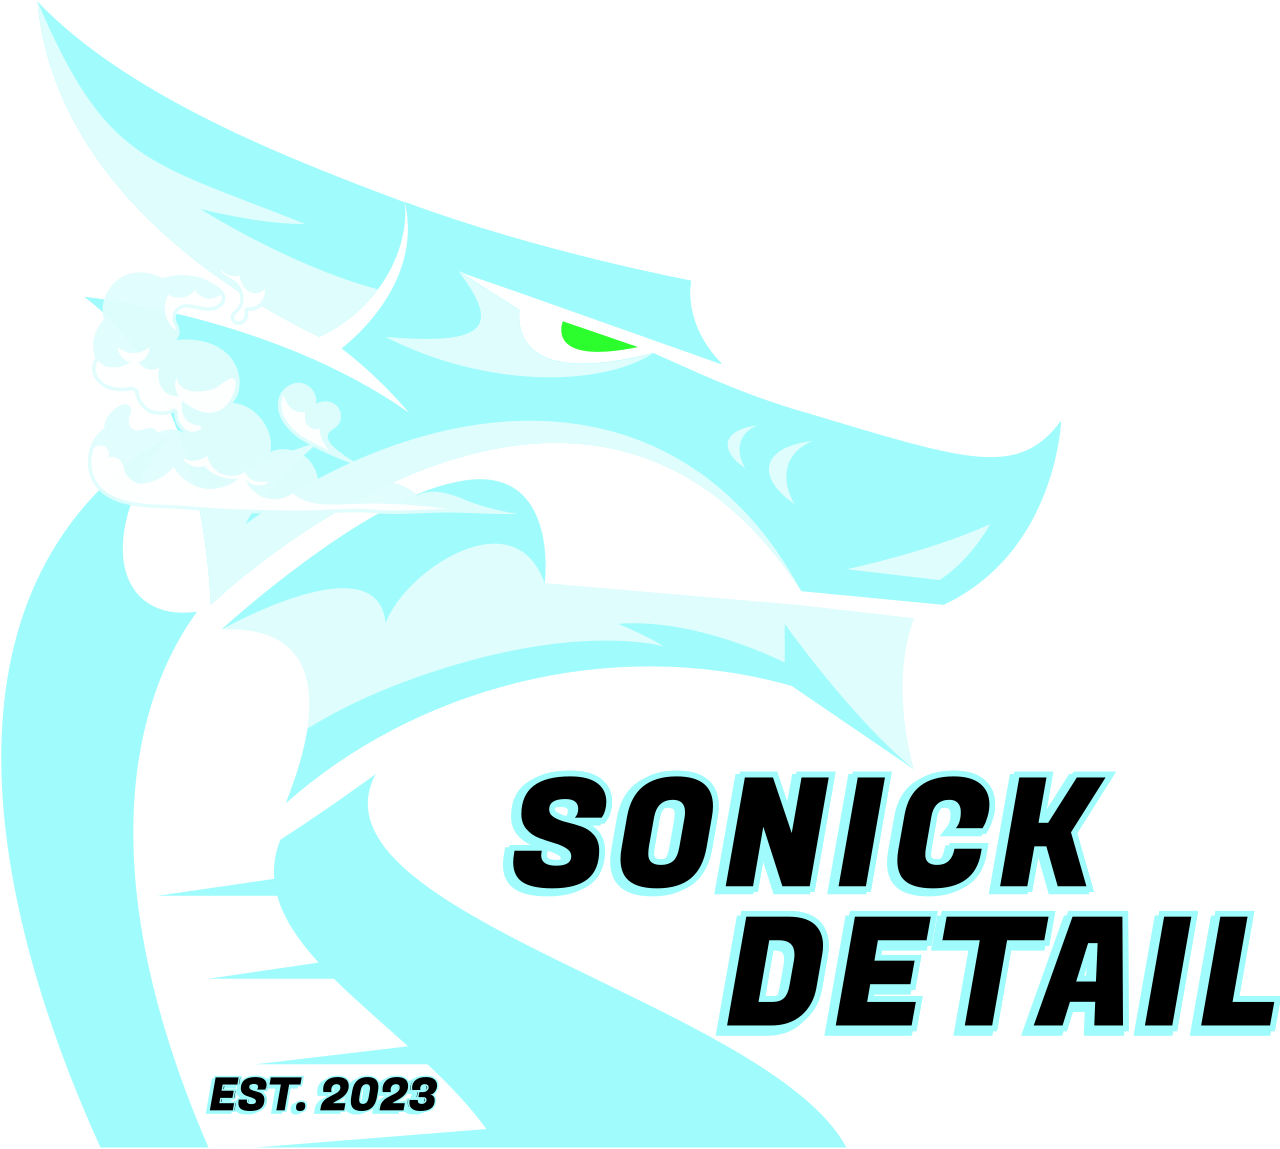 SONICK's logo